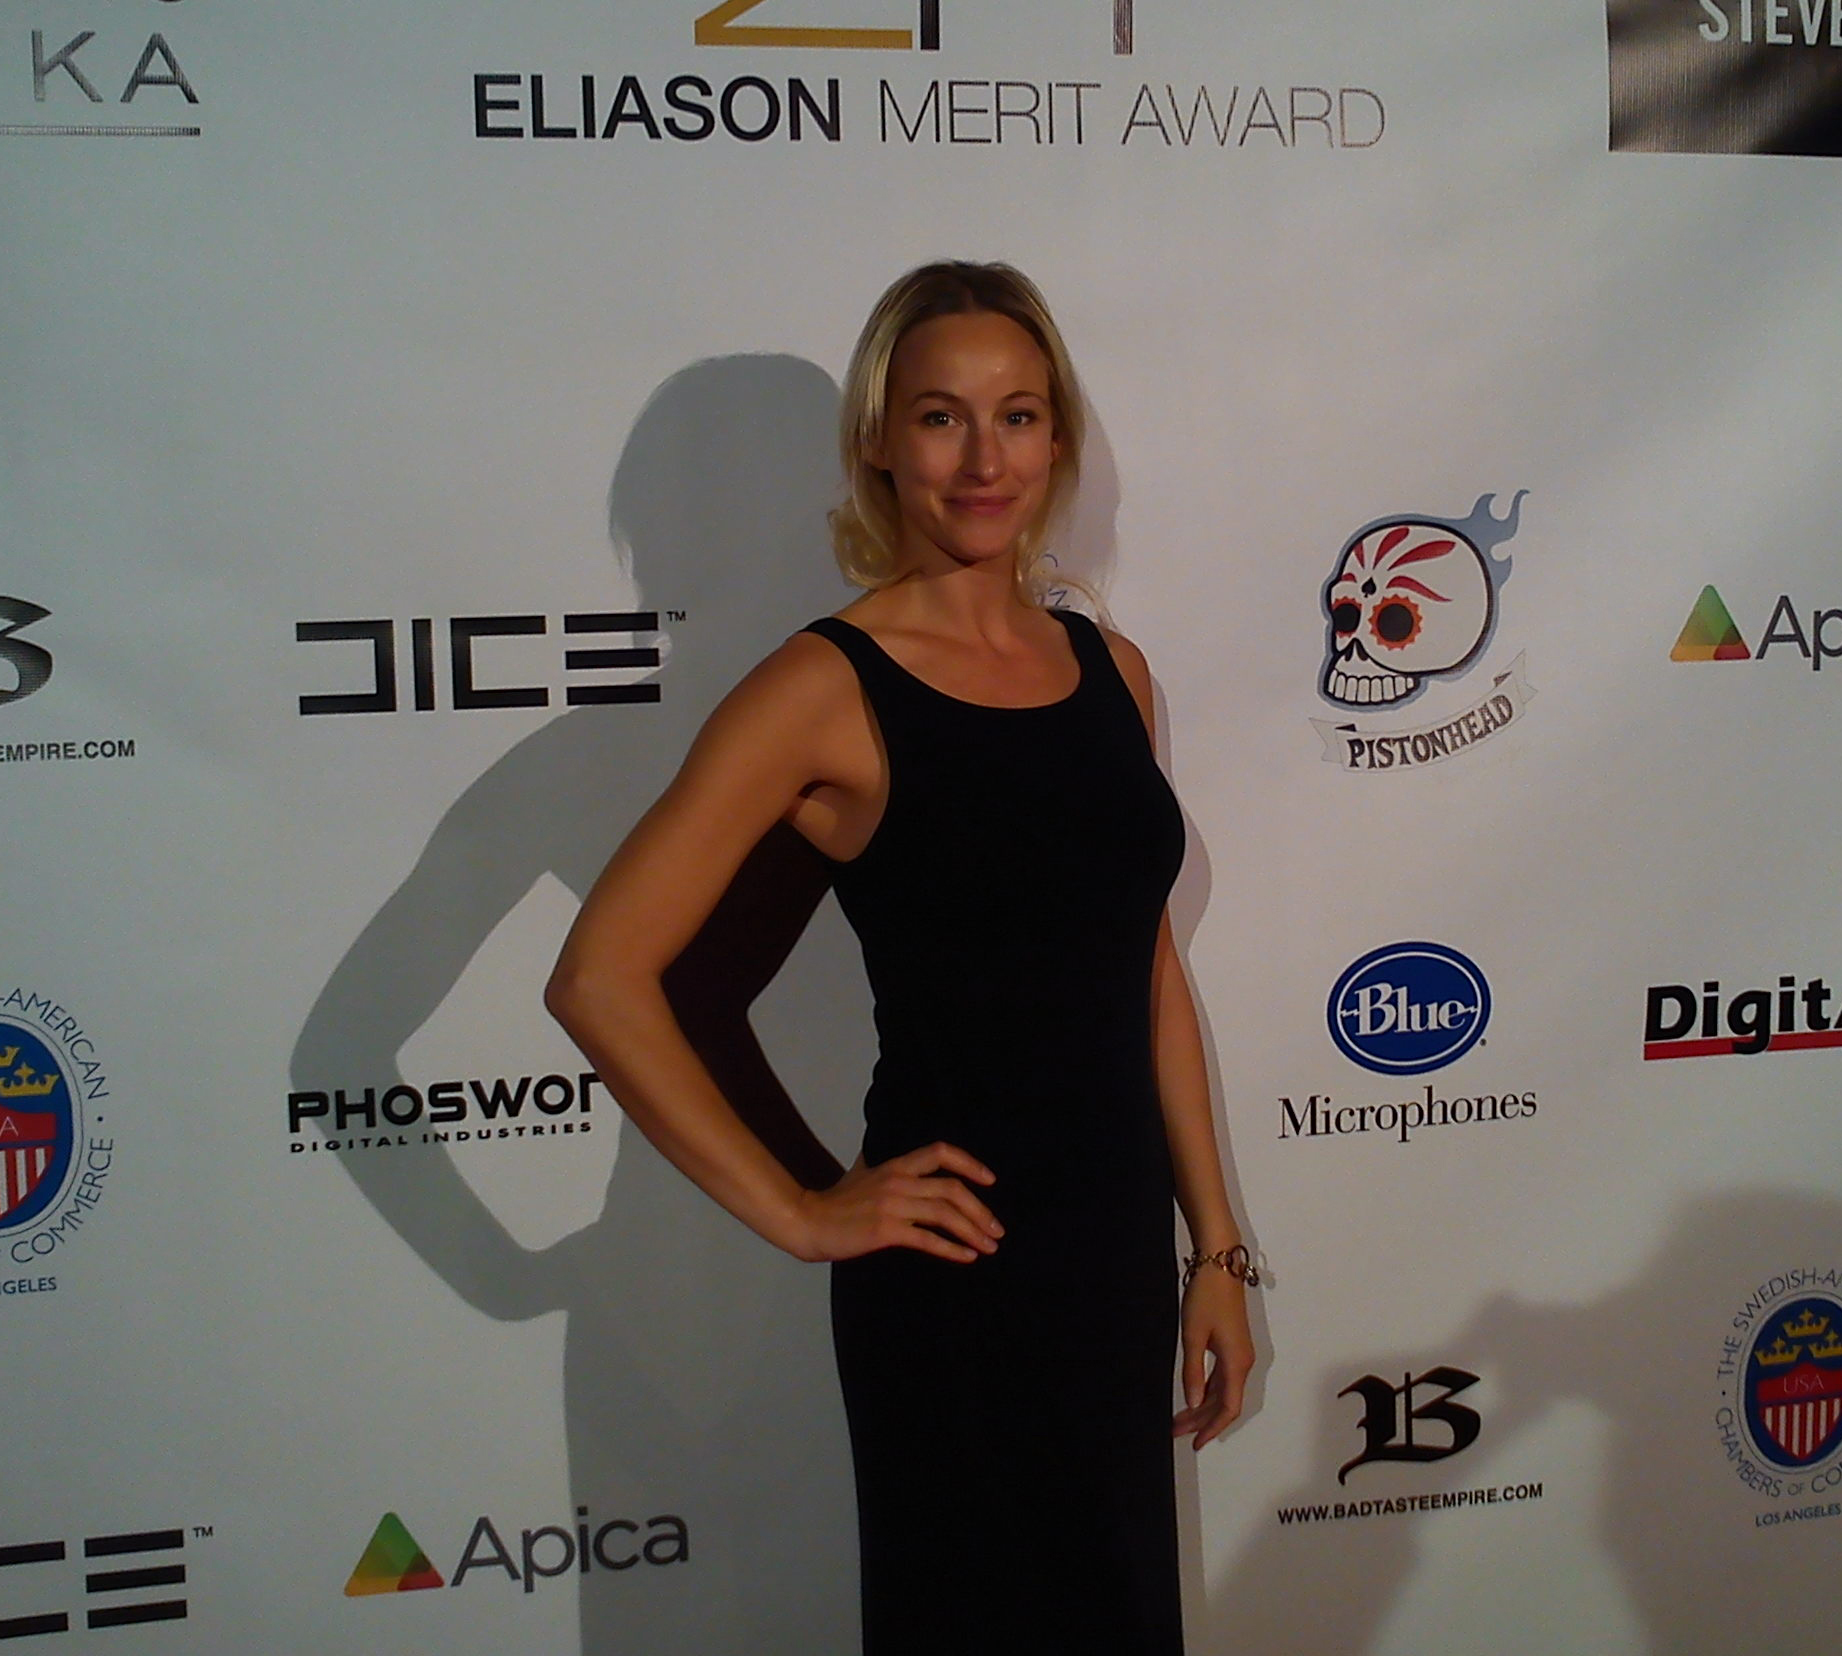 Nathalie Söderqvist at Eliason Merit Award 2013, Los Angeles